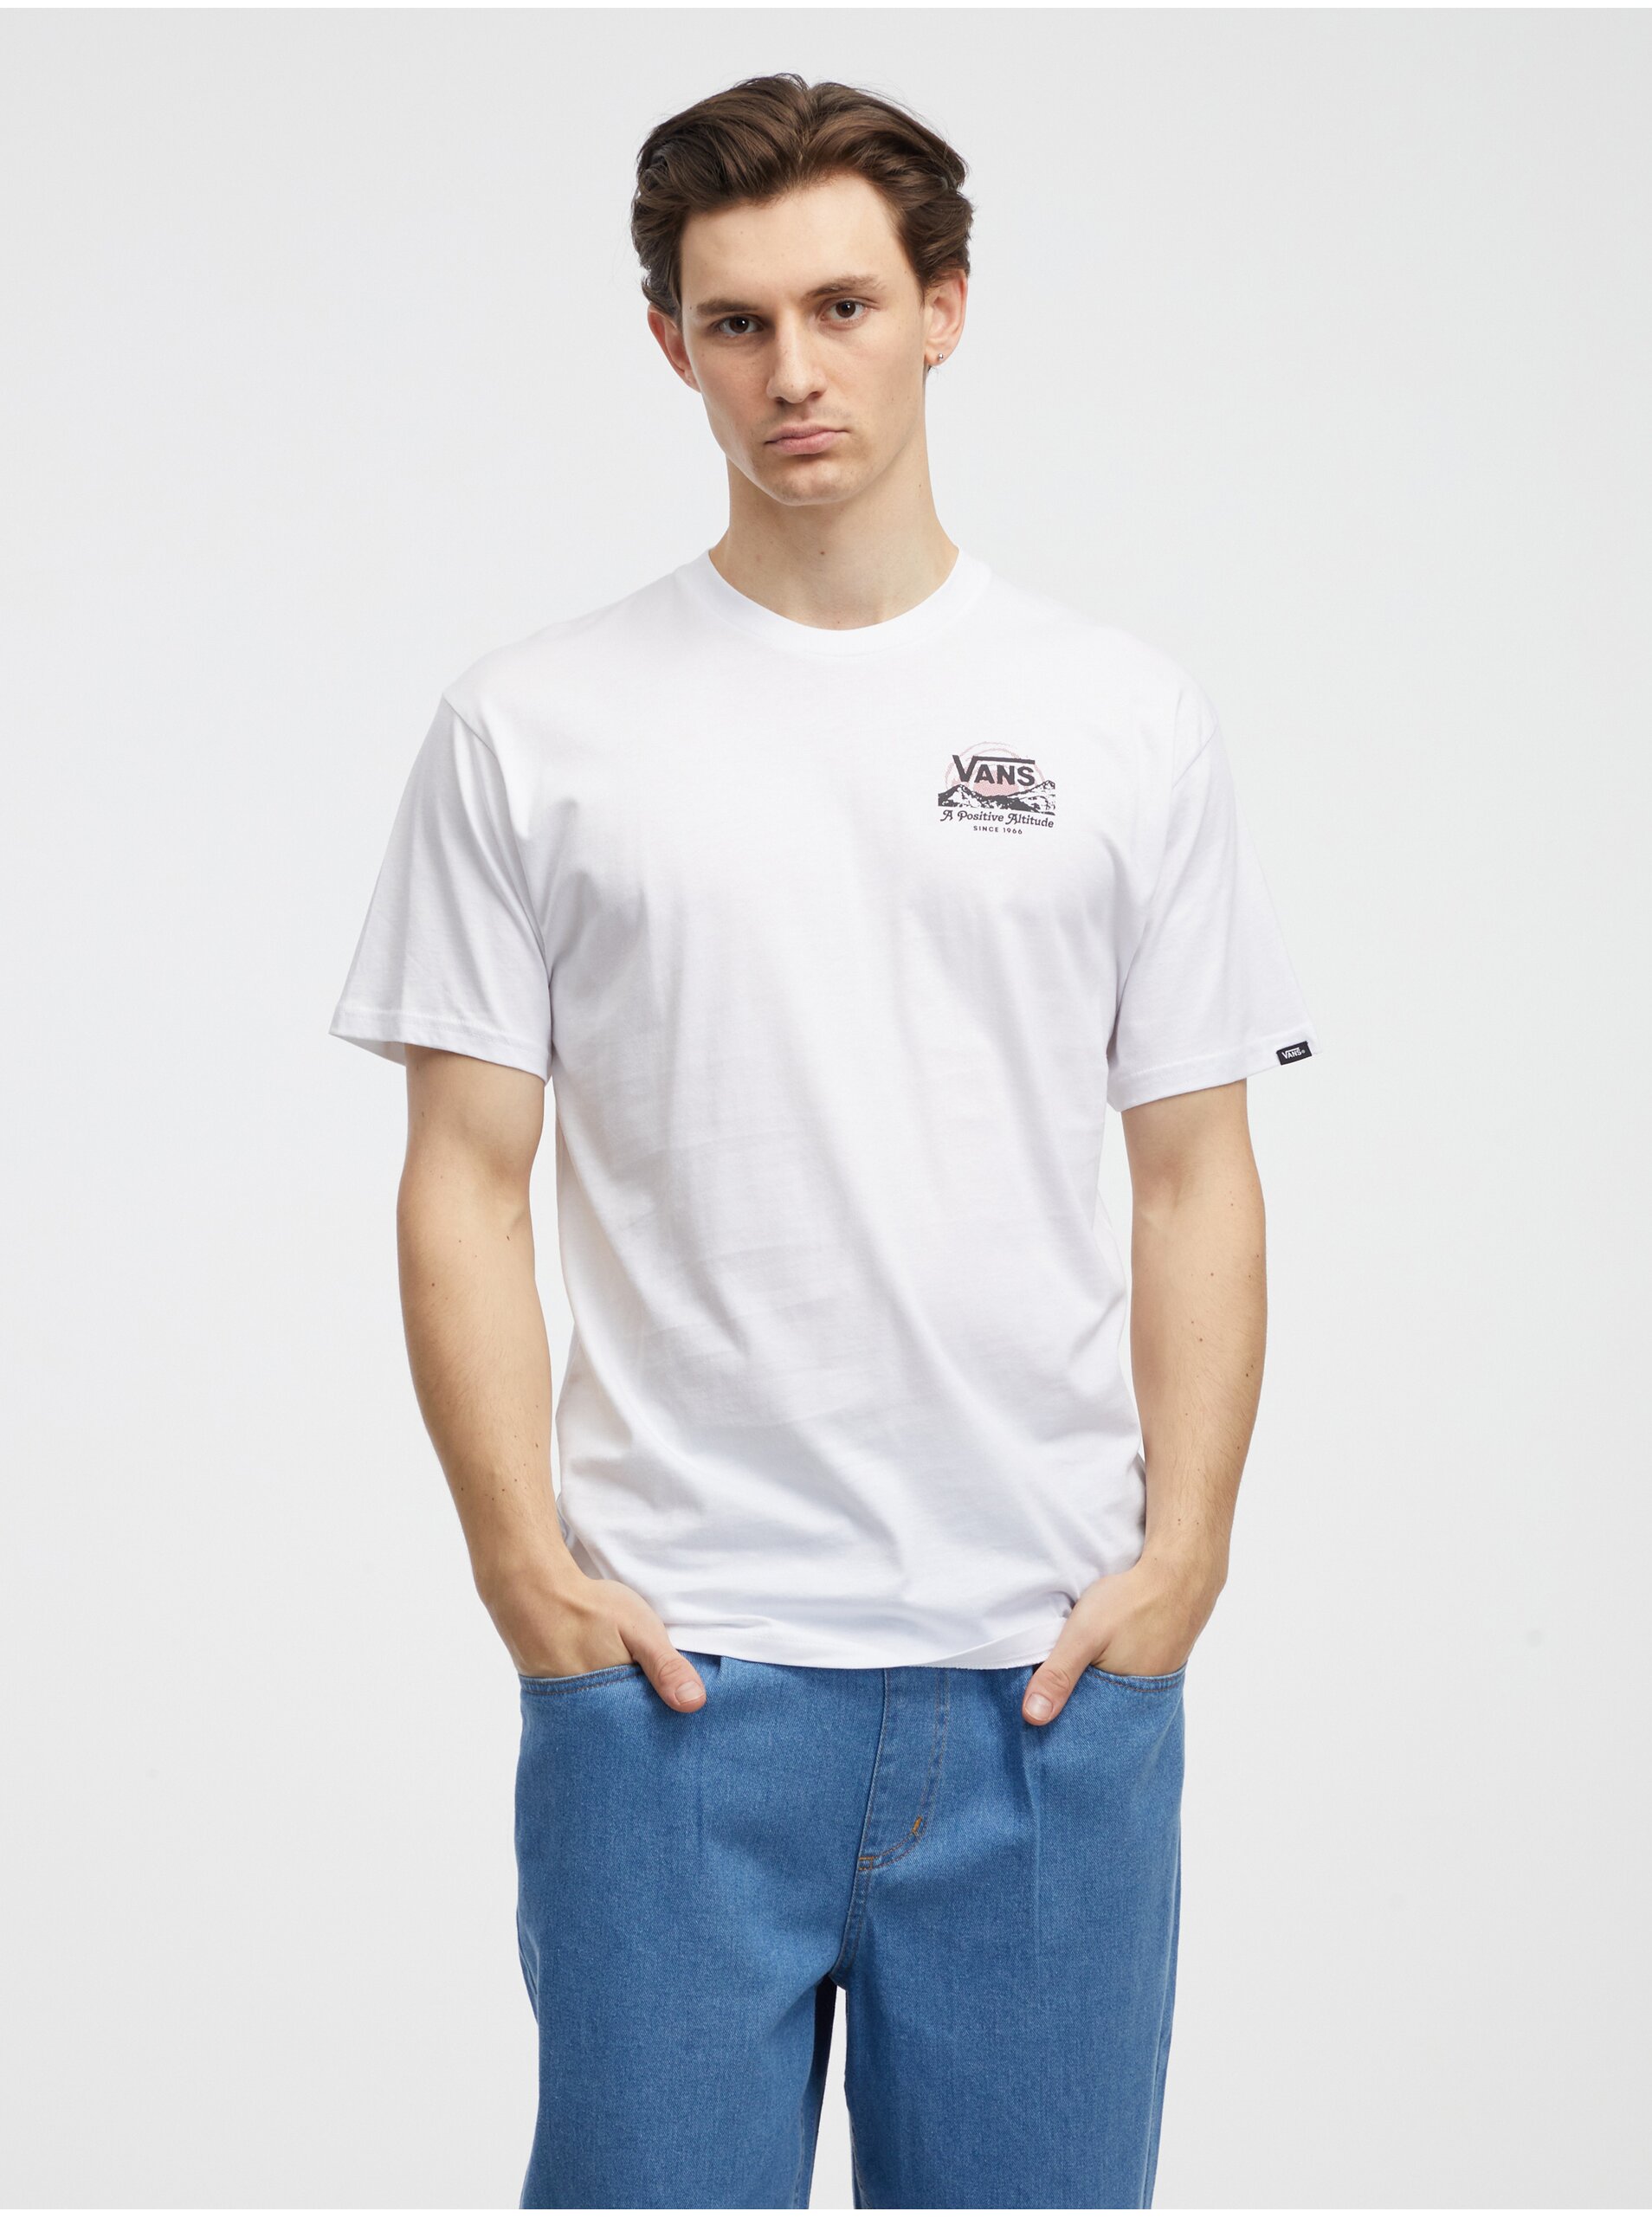 E-shop Bílé pánské tričko VANS Positive Attitude